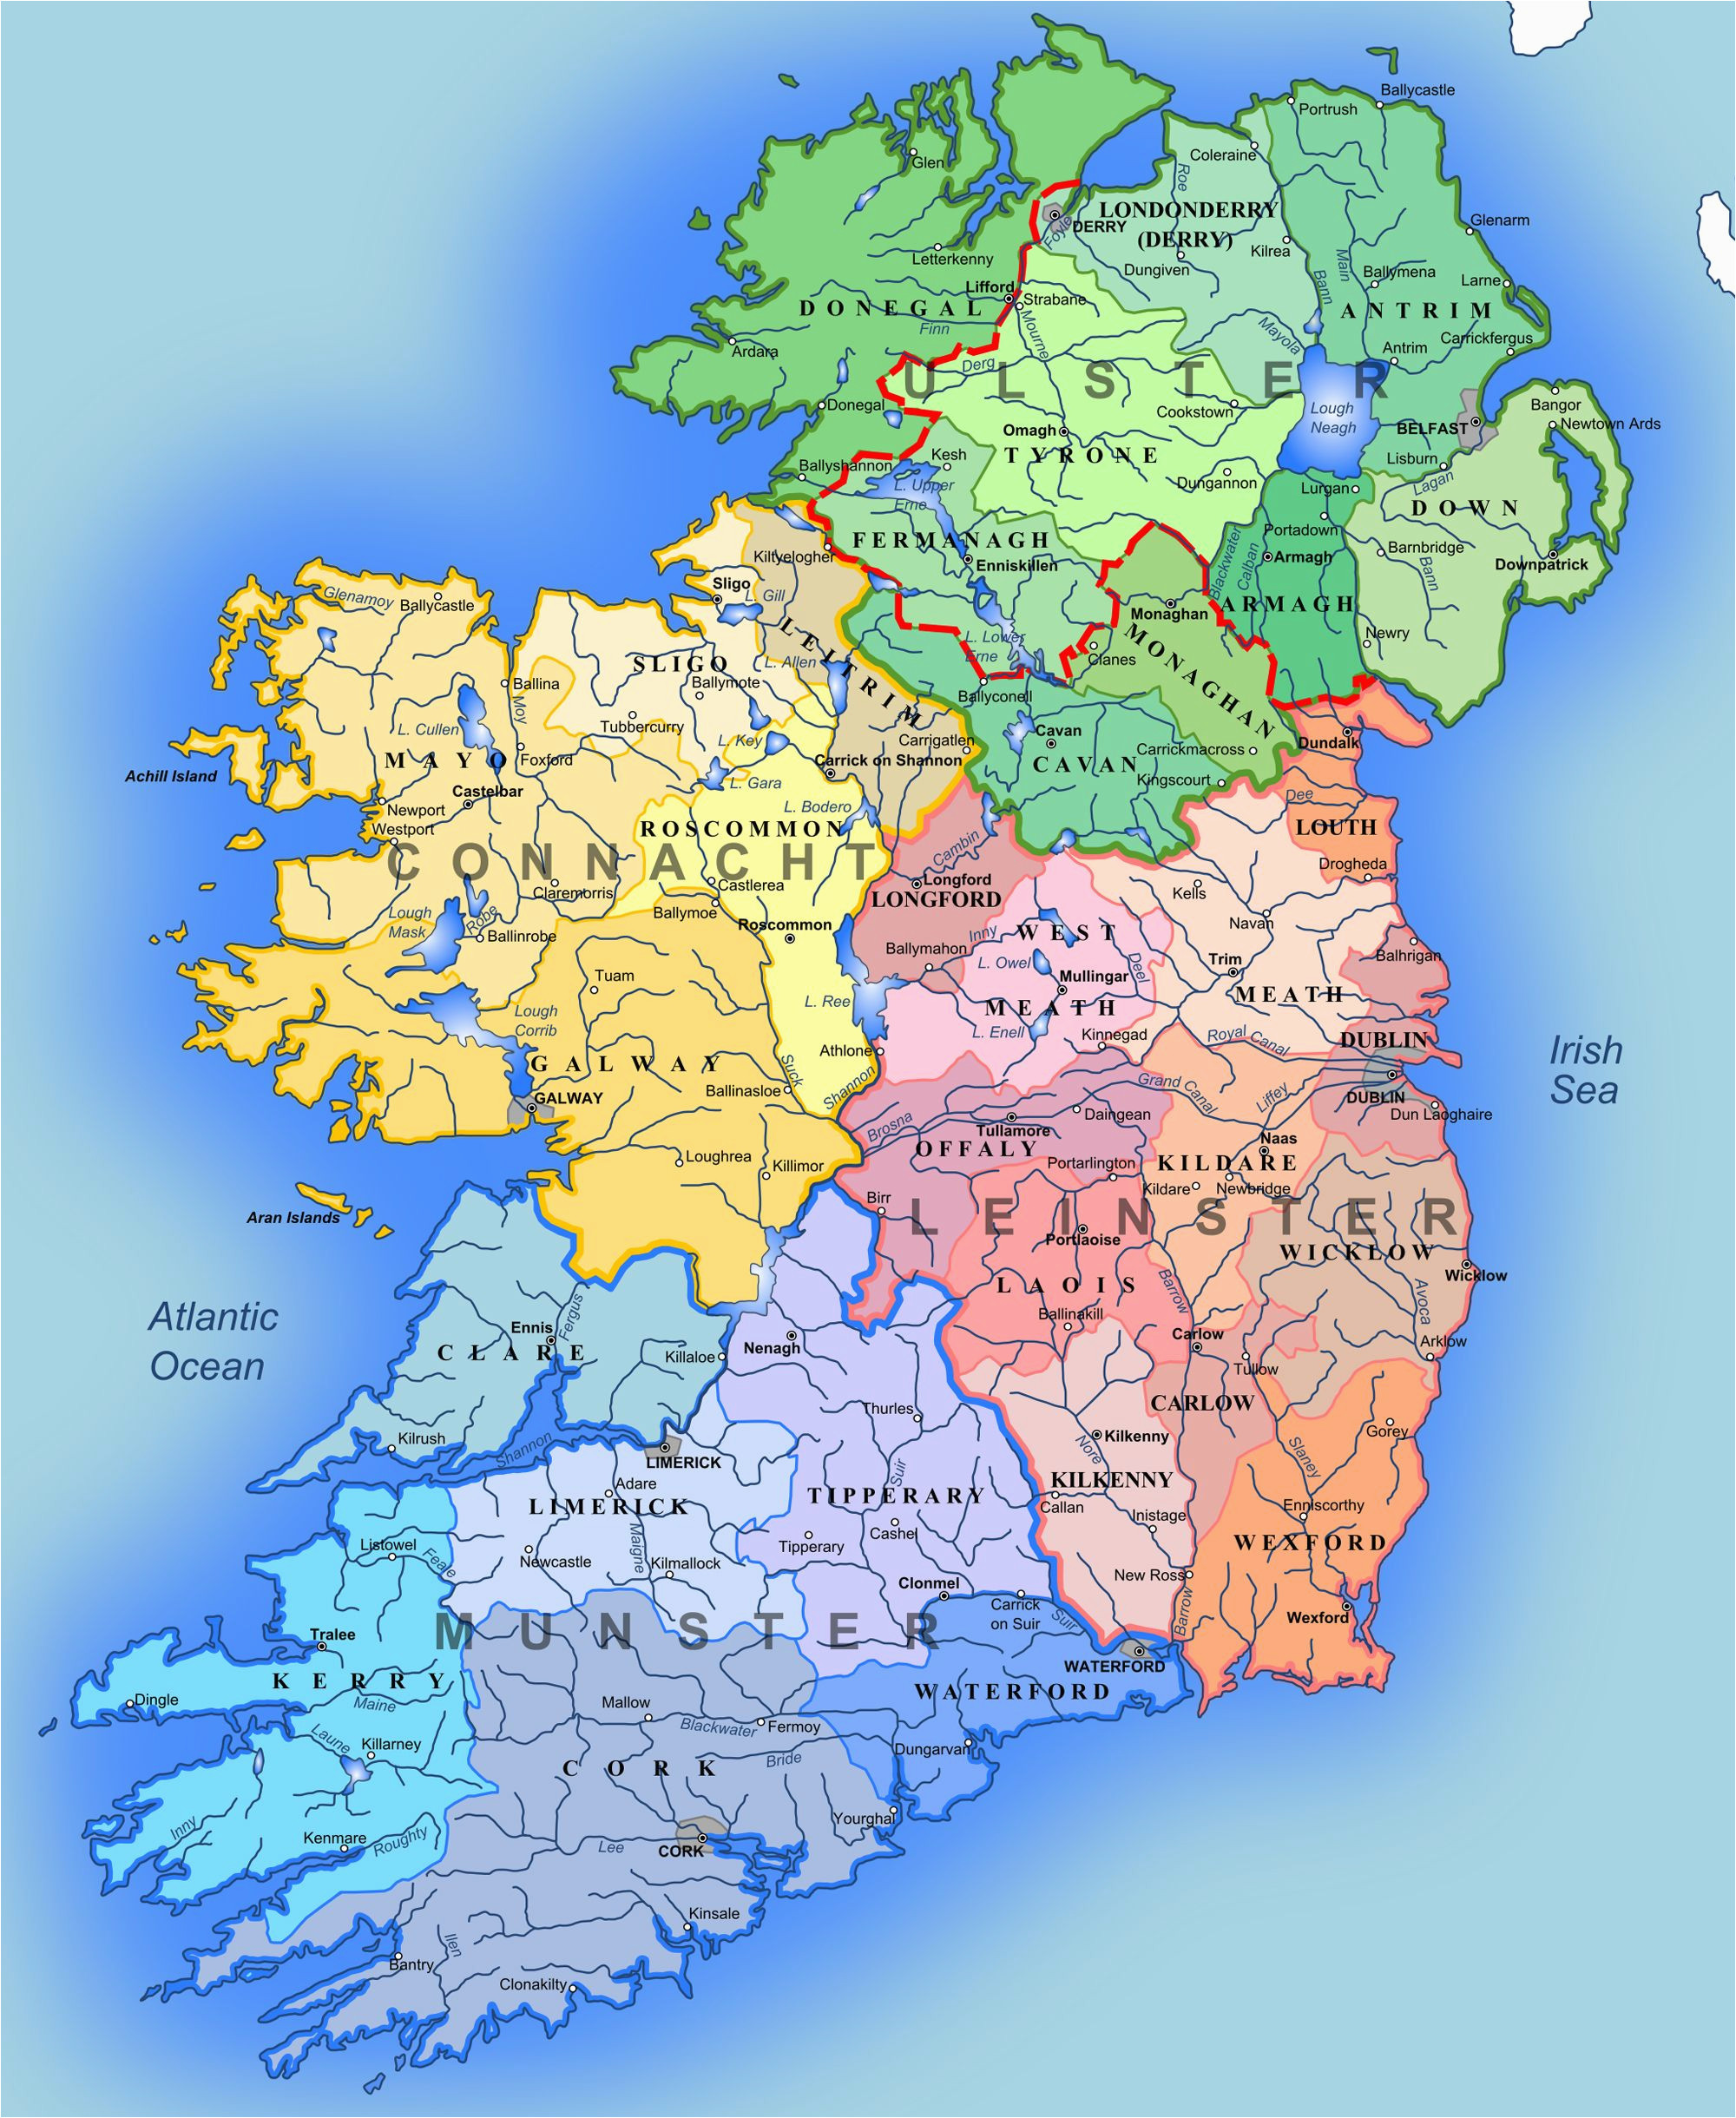 32-counties-of-ireland-map-secretmuseum